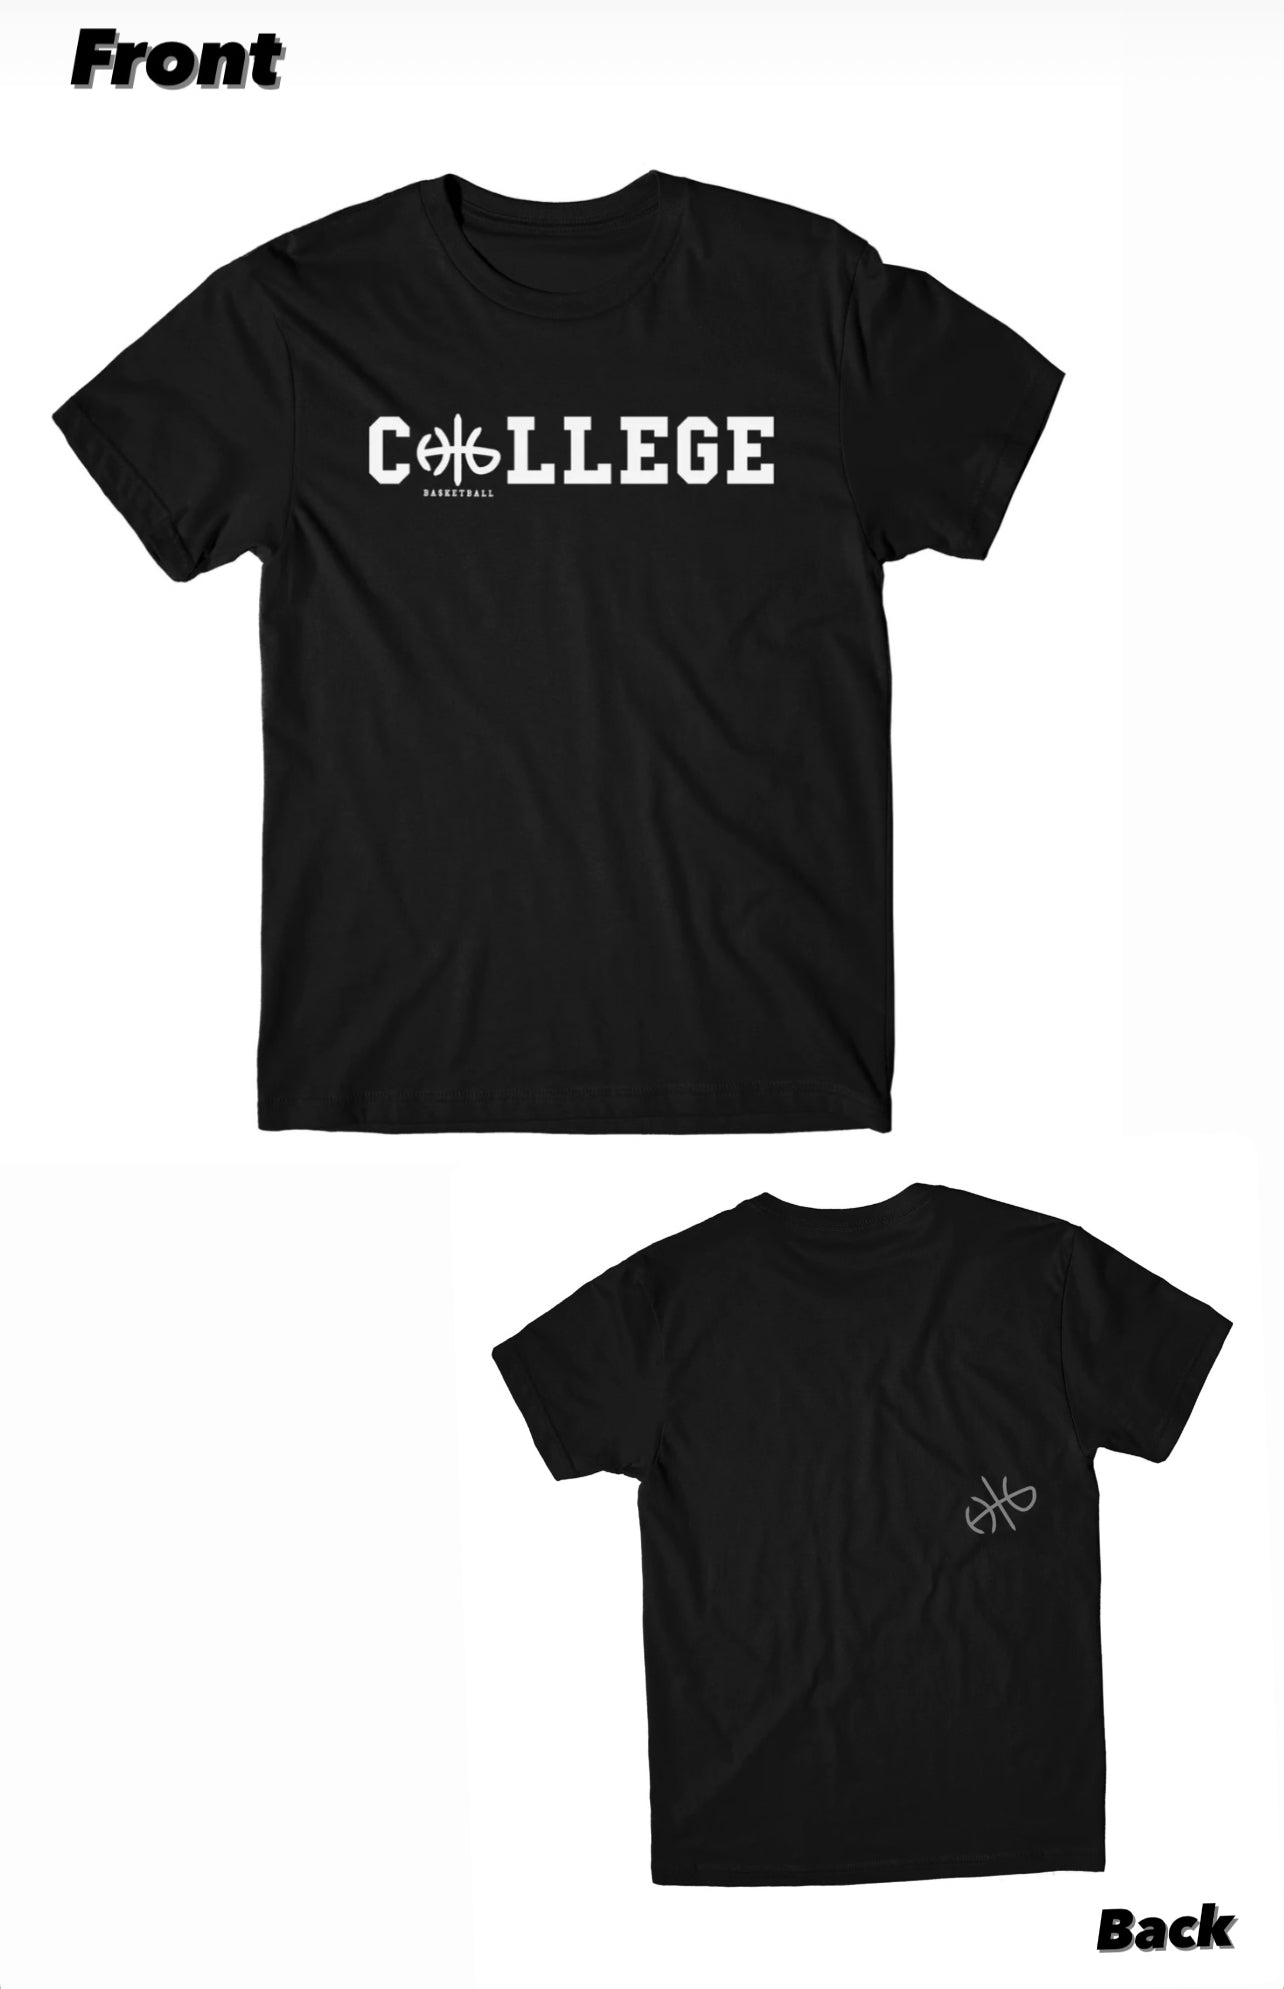 HtG "COLLEGE" Crew T Shirt